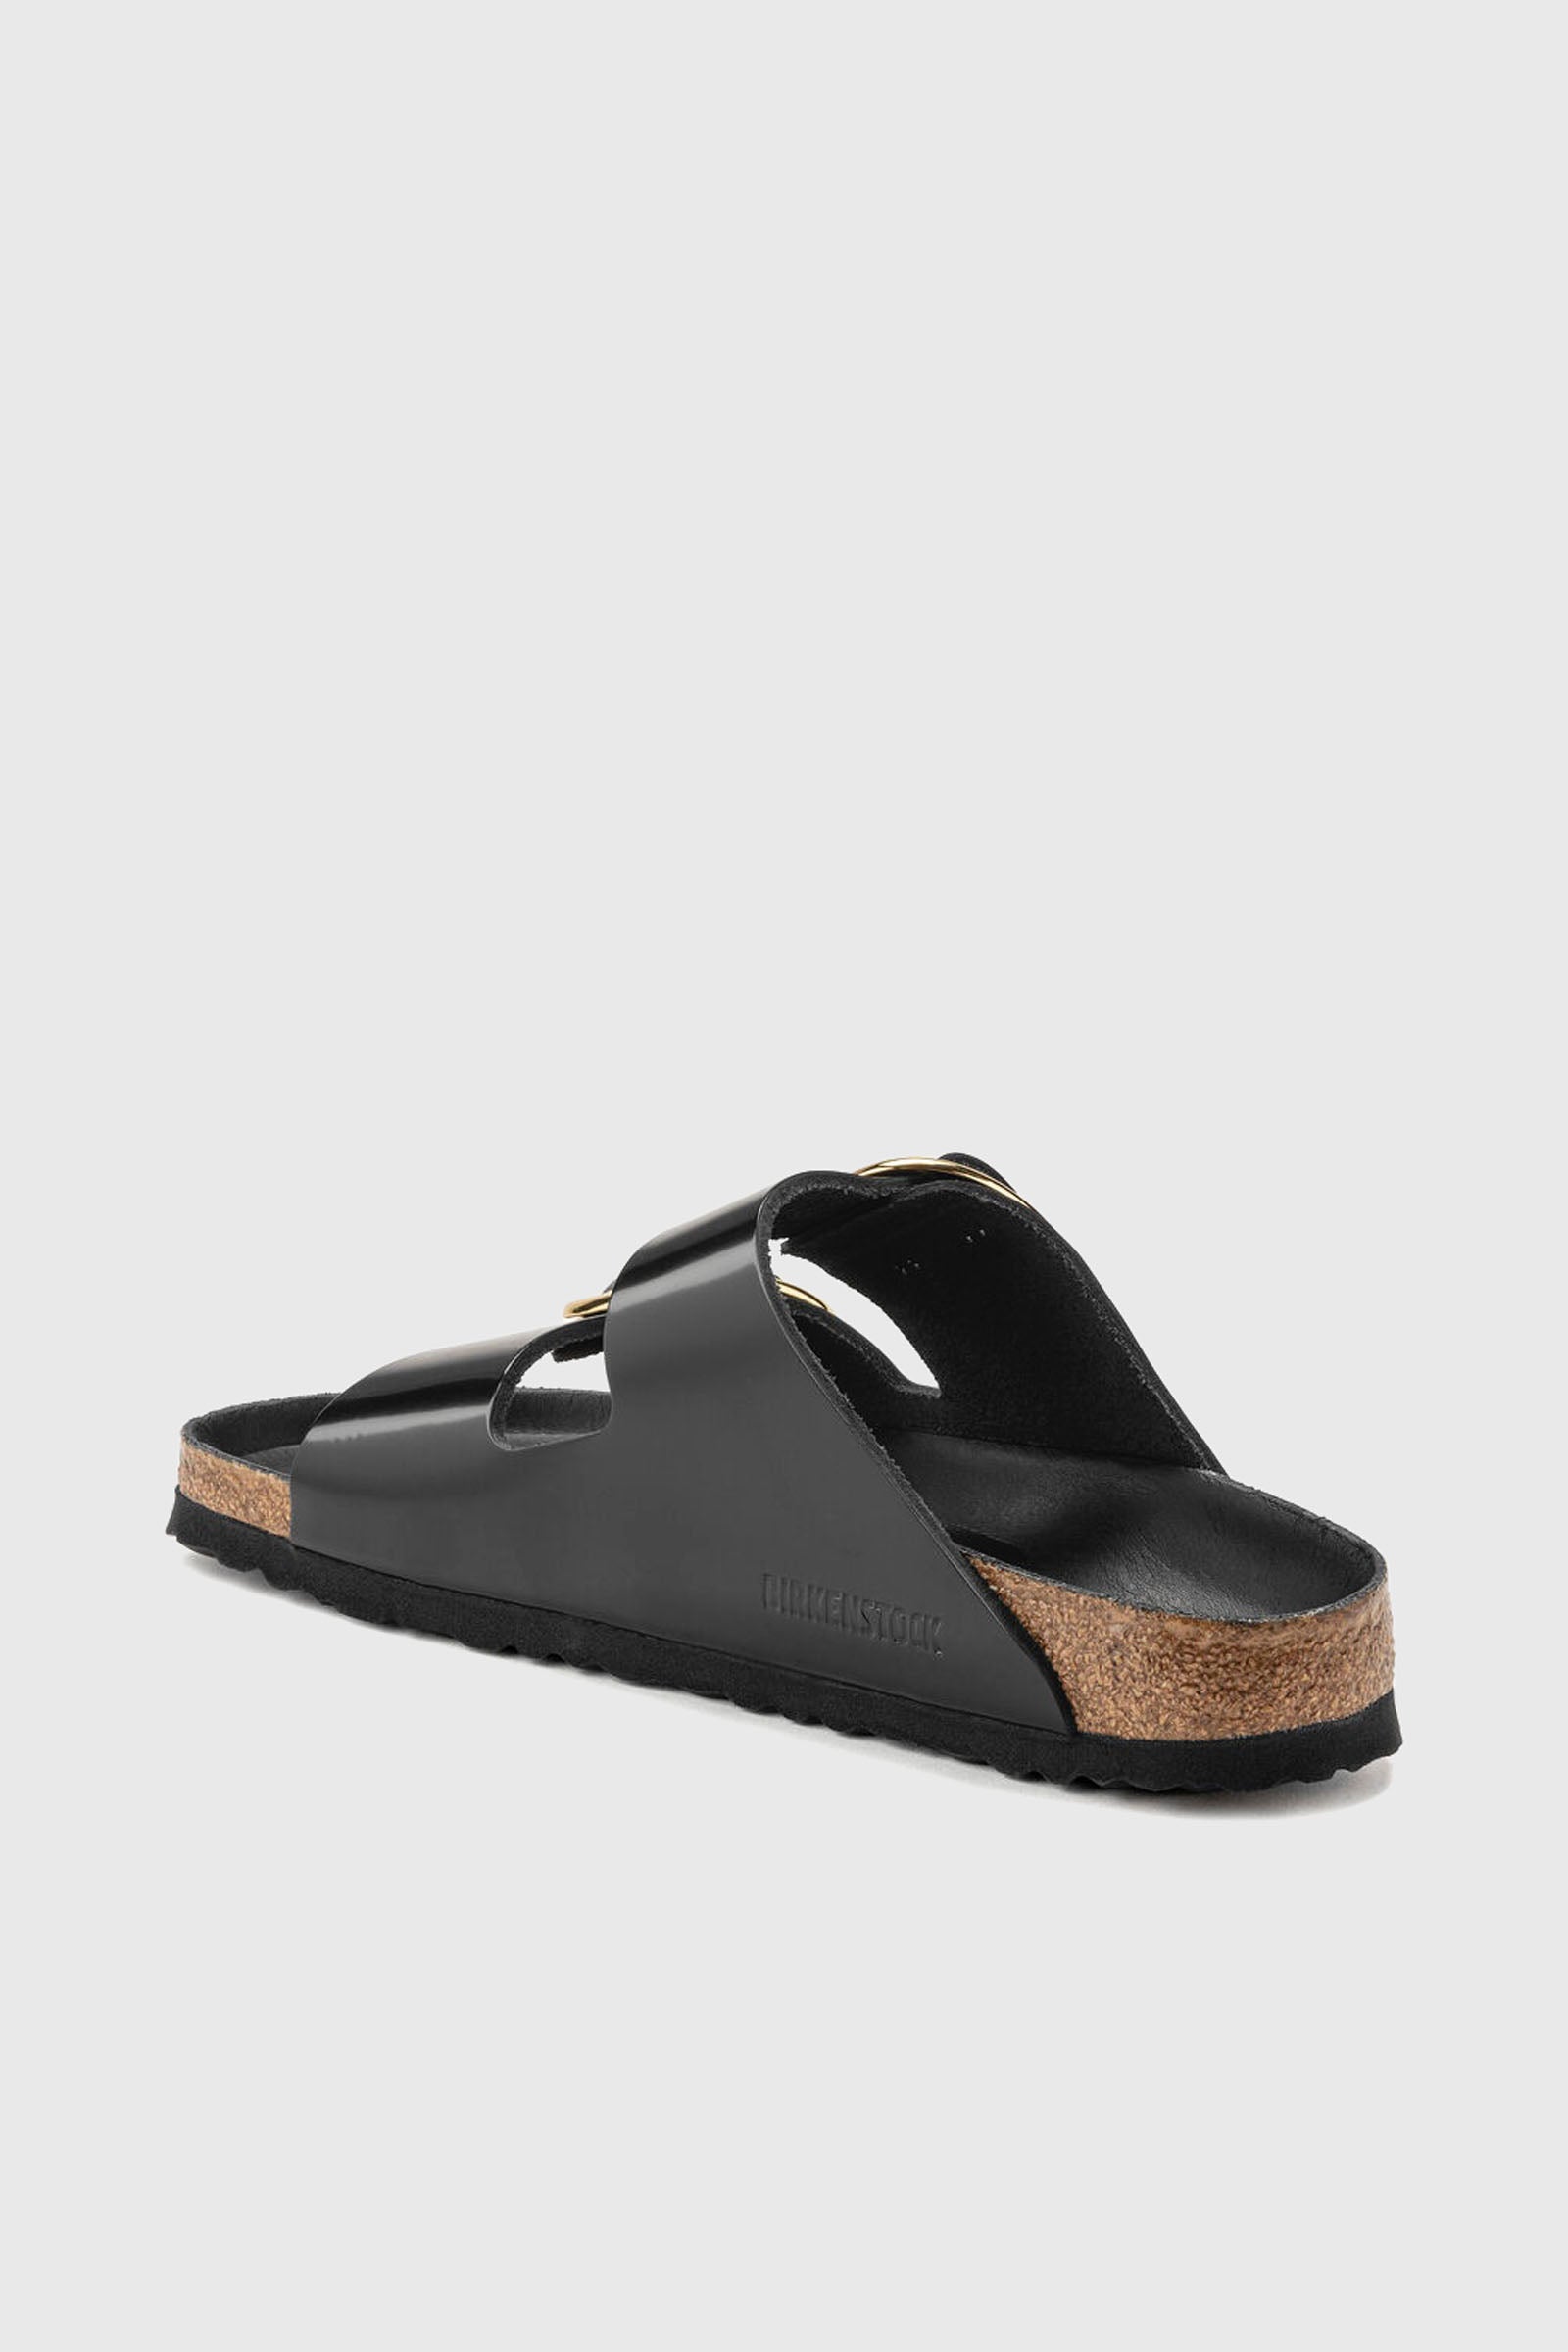 Birkenstock Arizona Leather Sandal Black - 4